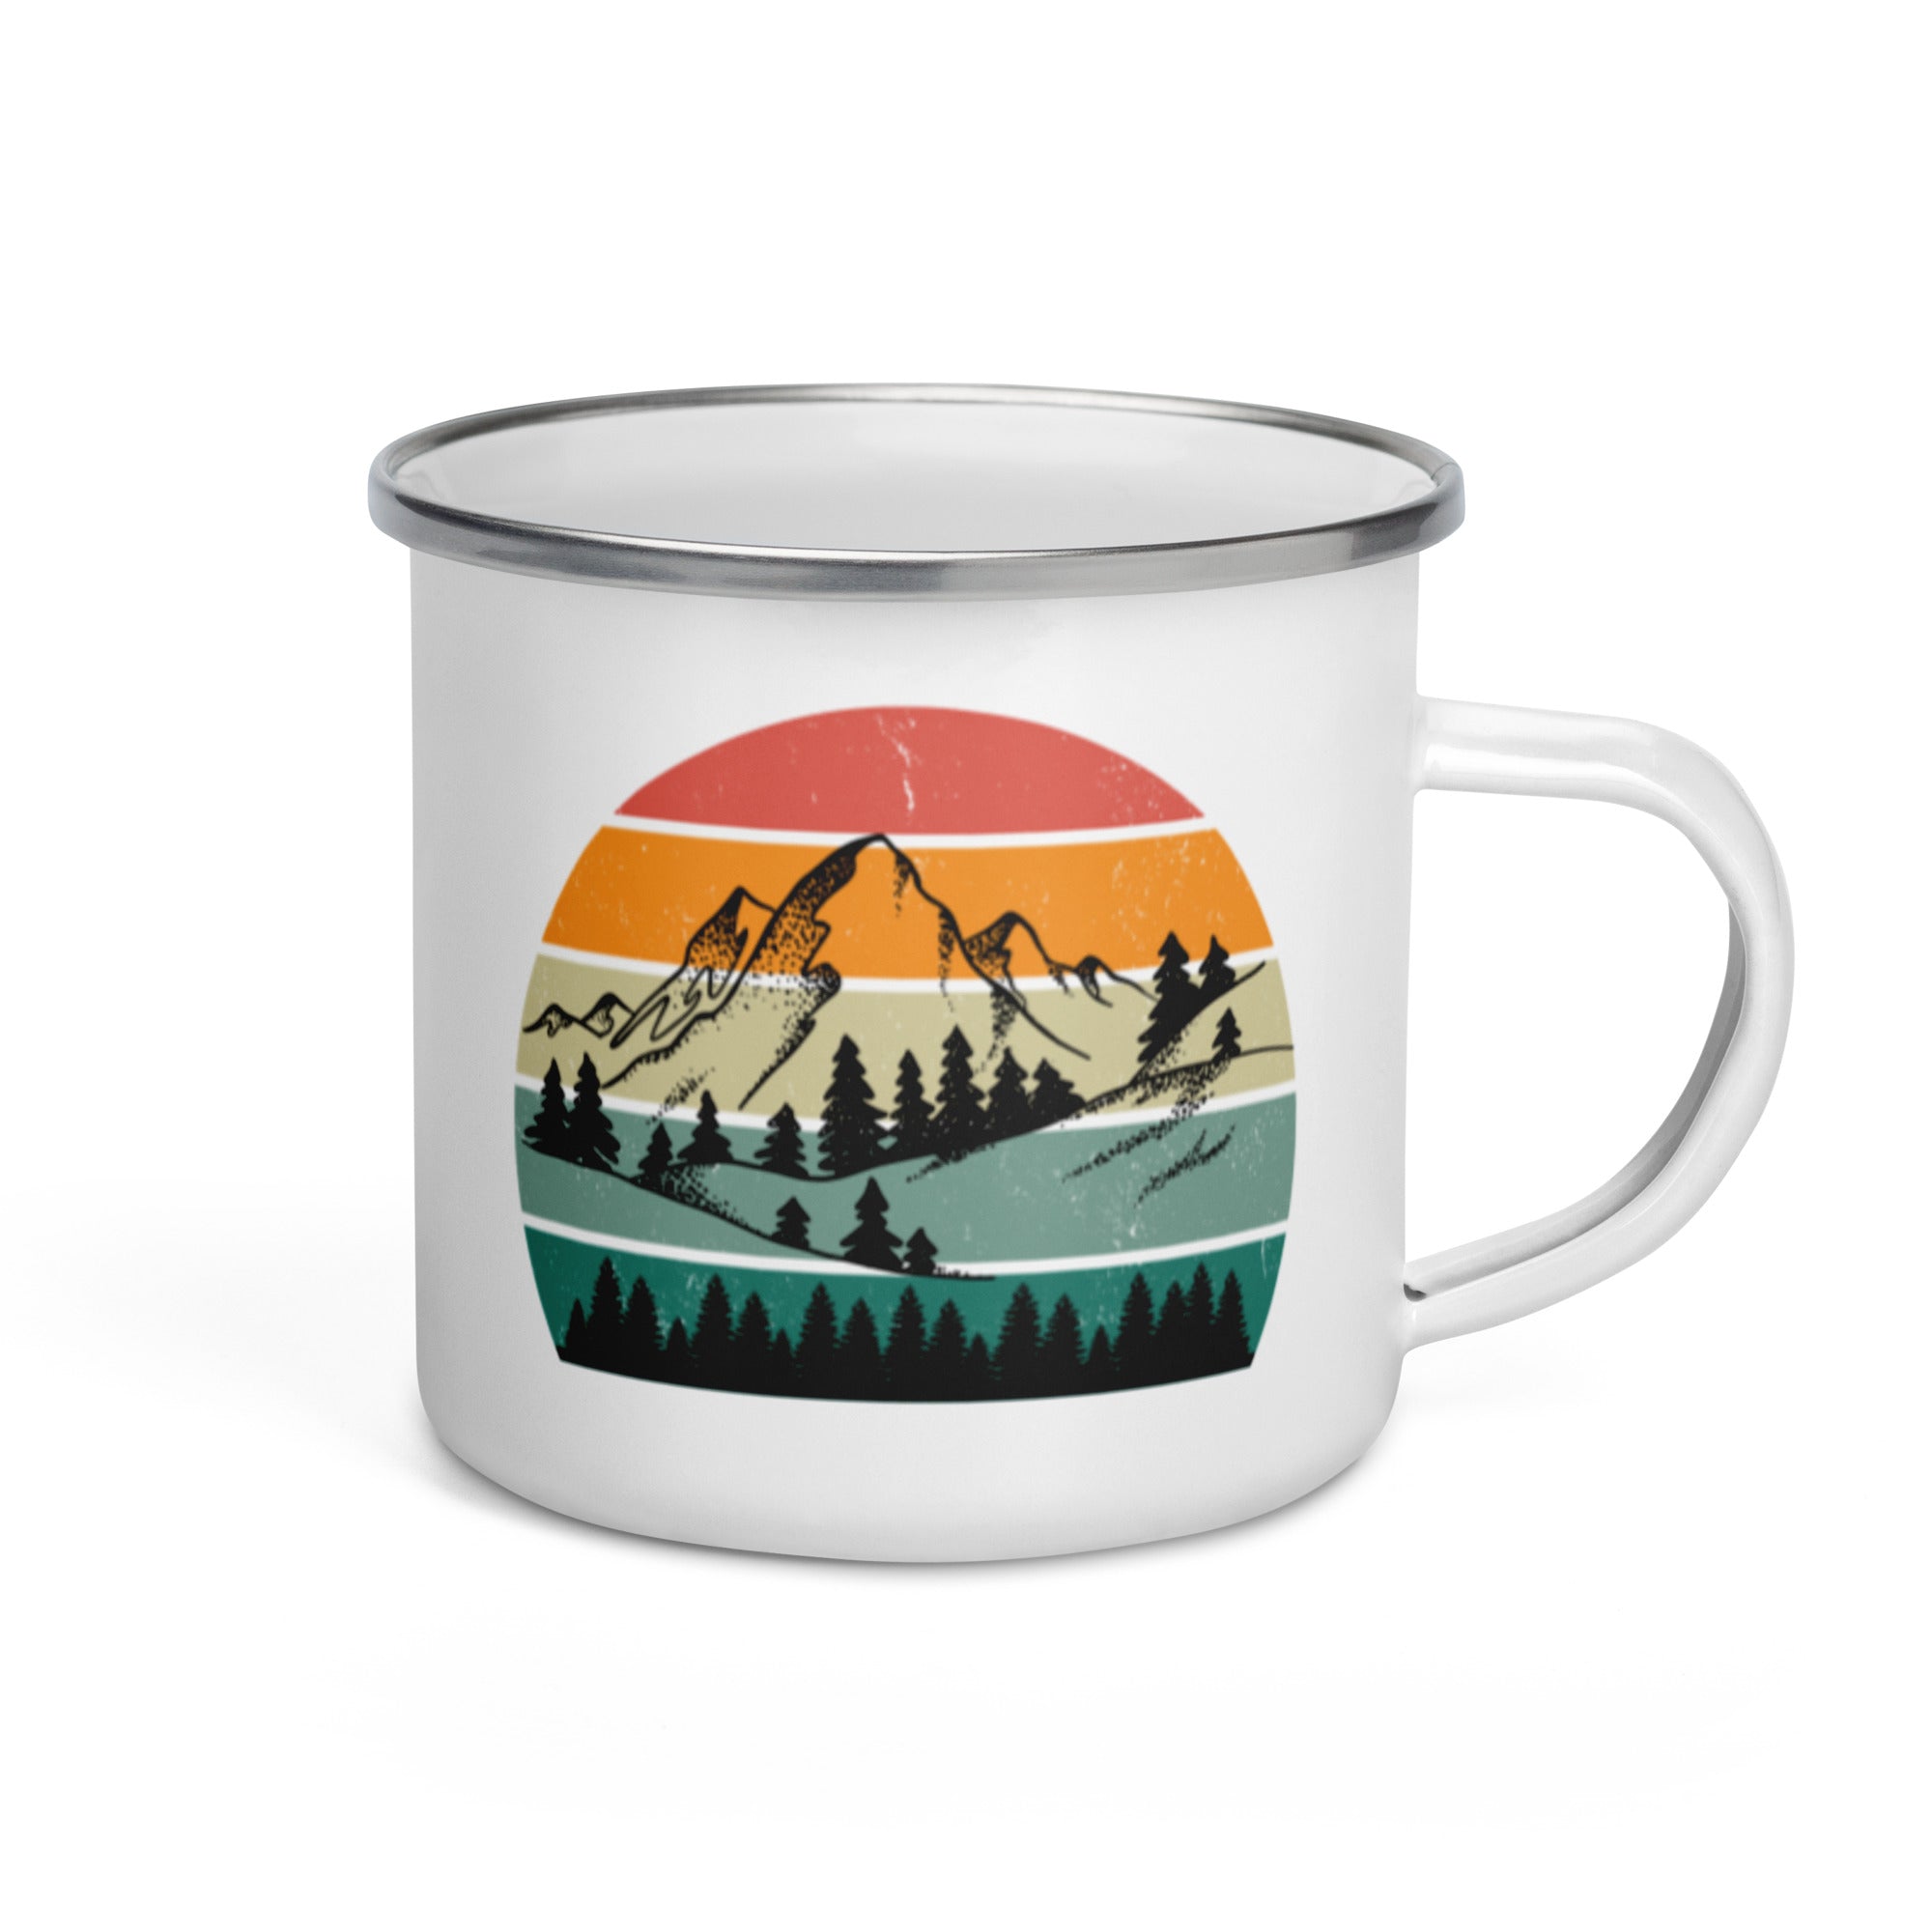 Mountain Range - Enamel Travel Coffee Mug - Grizzee